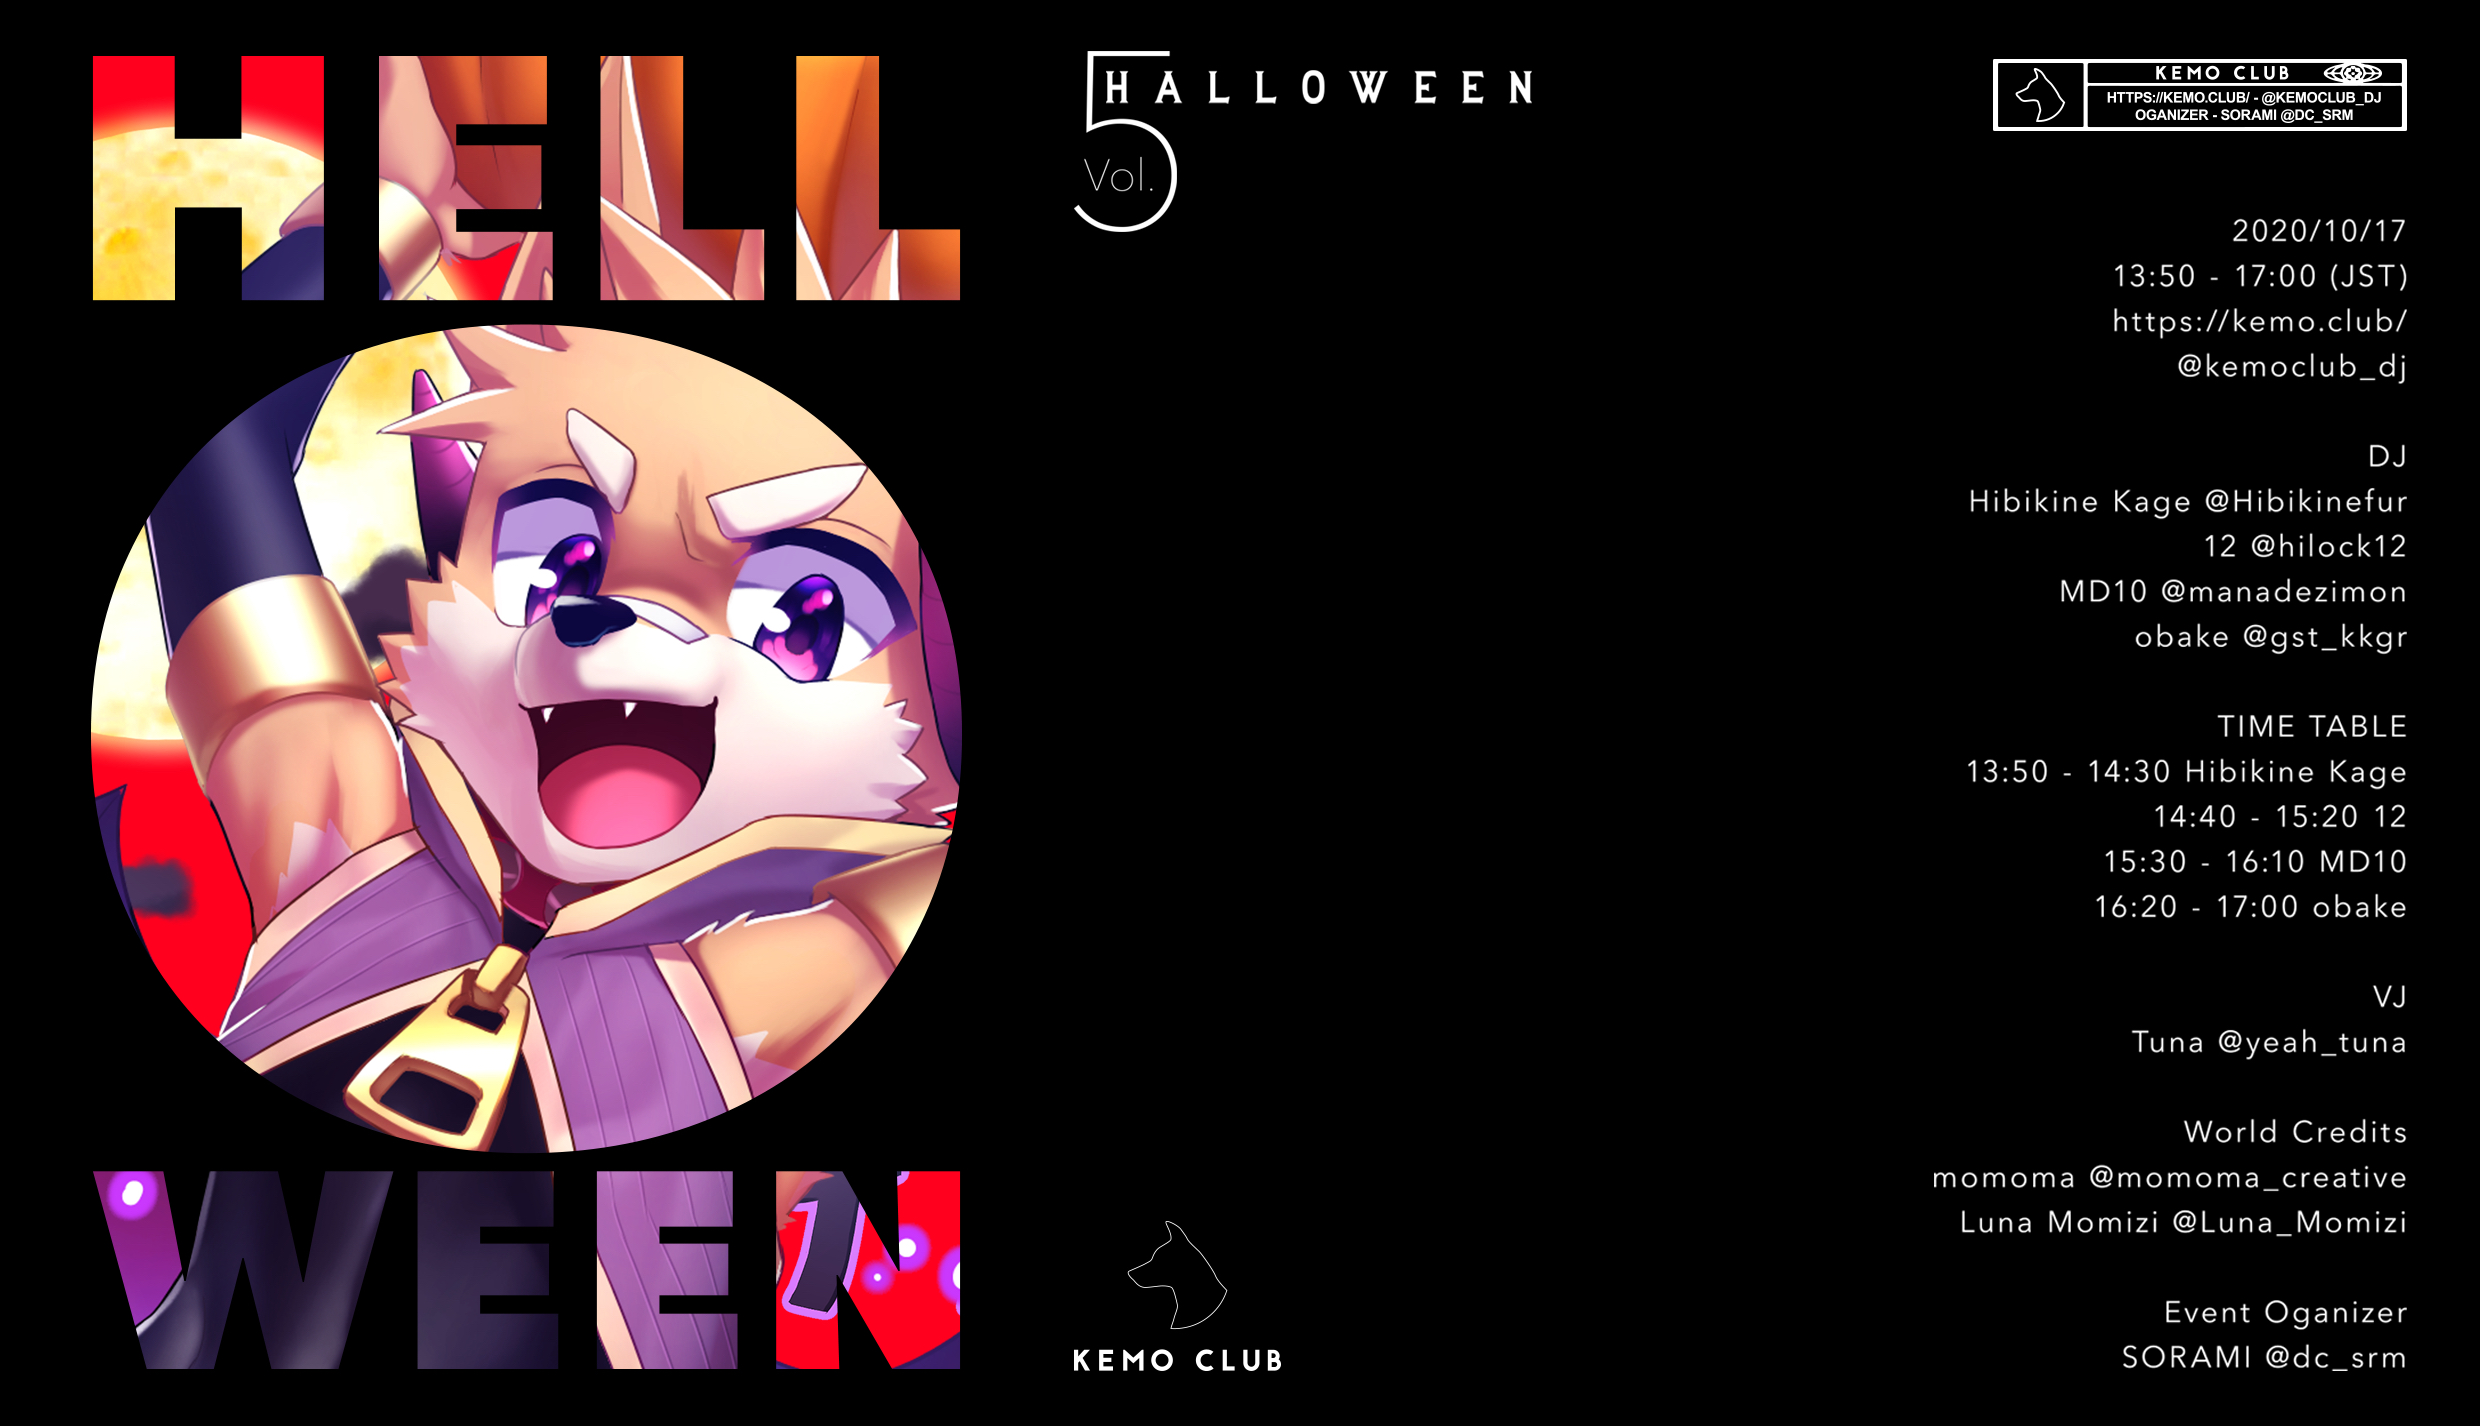 KEMO CLUB Halloween Party